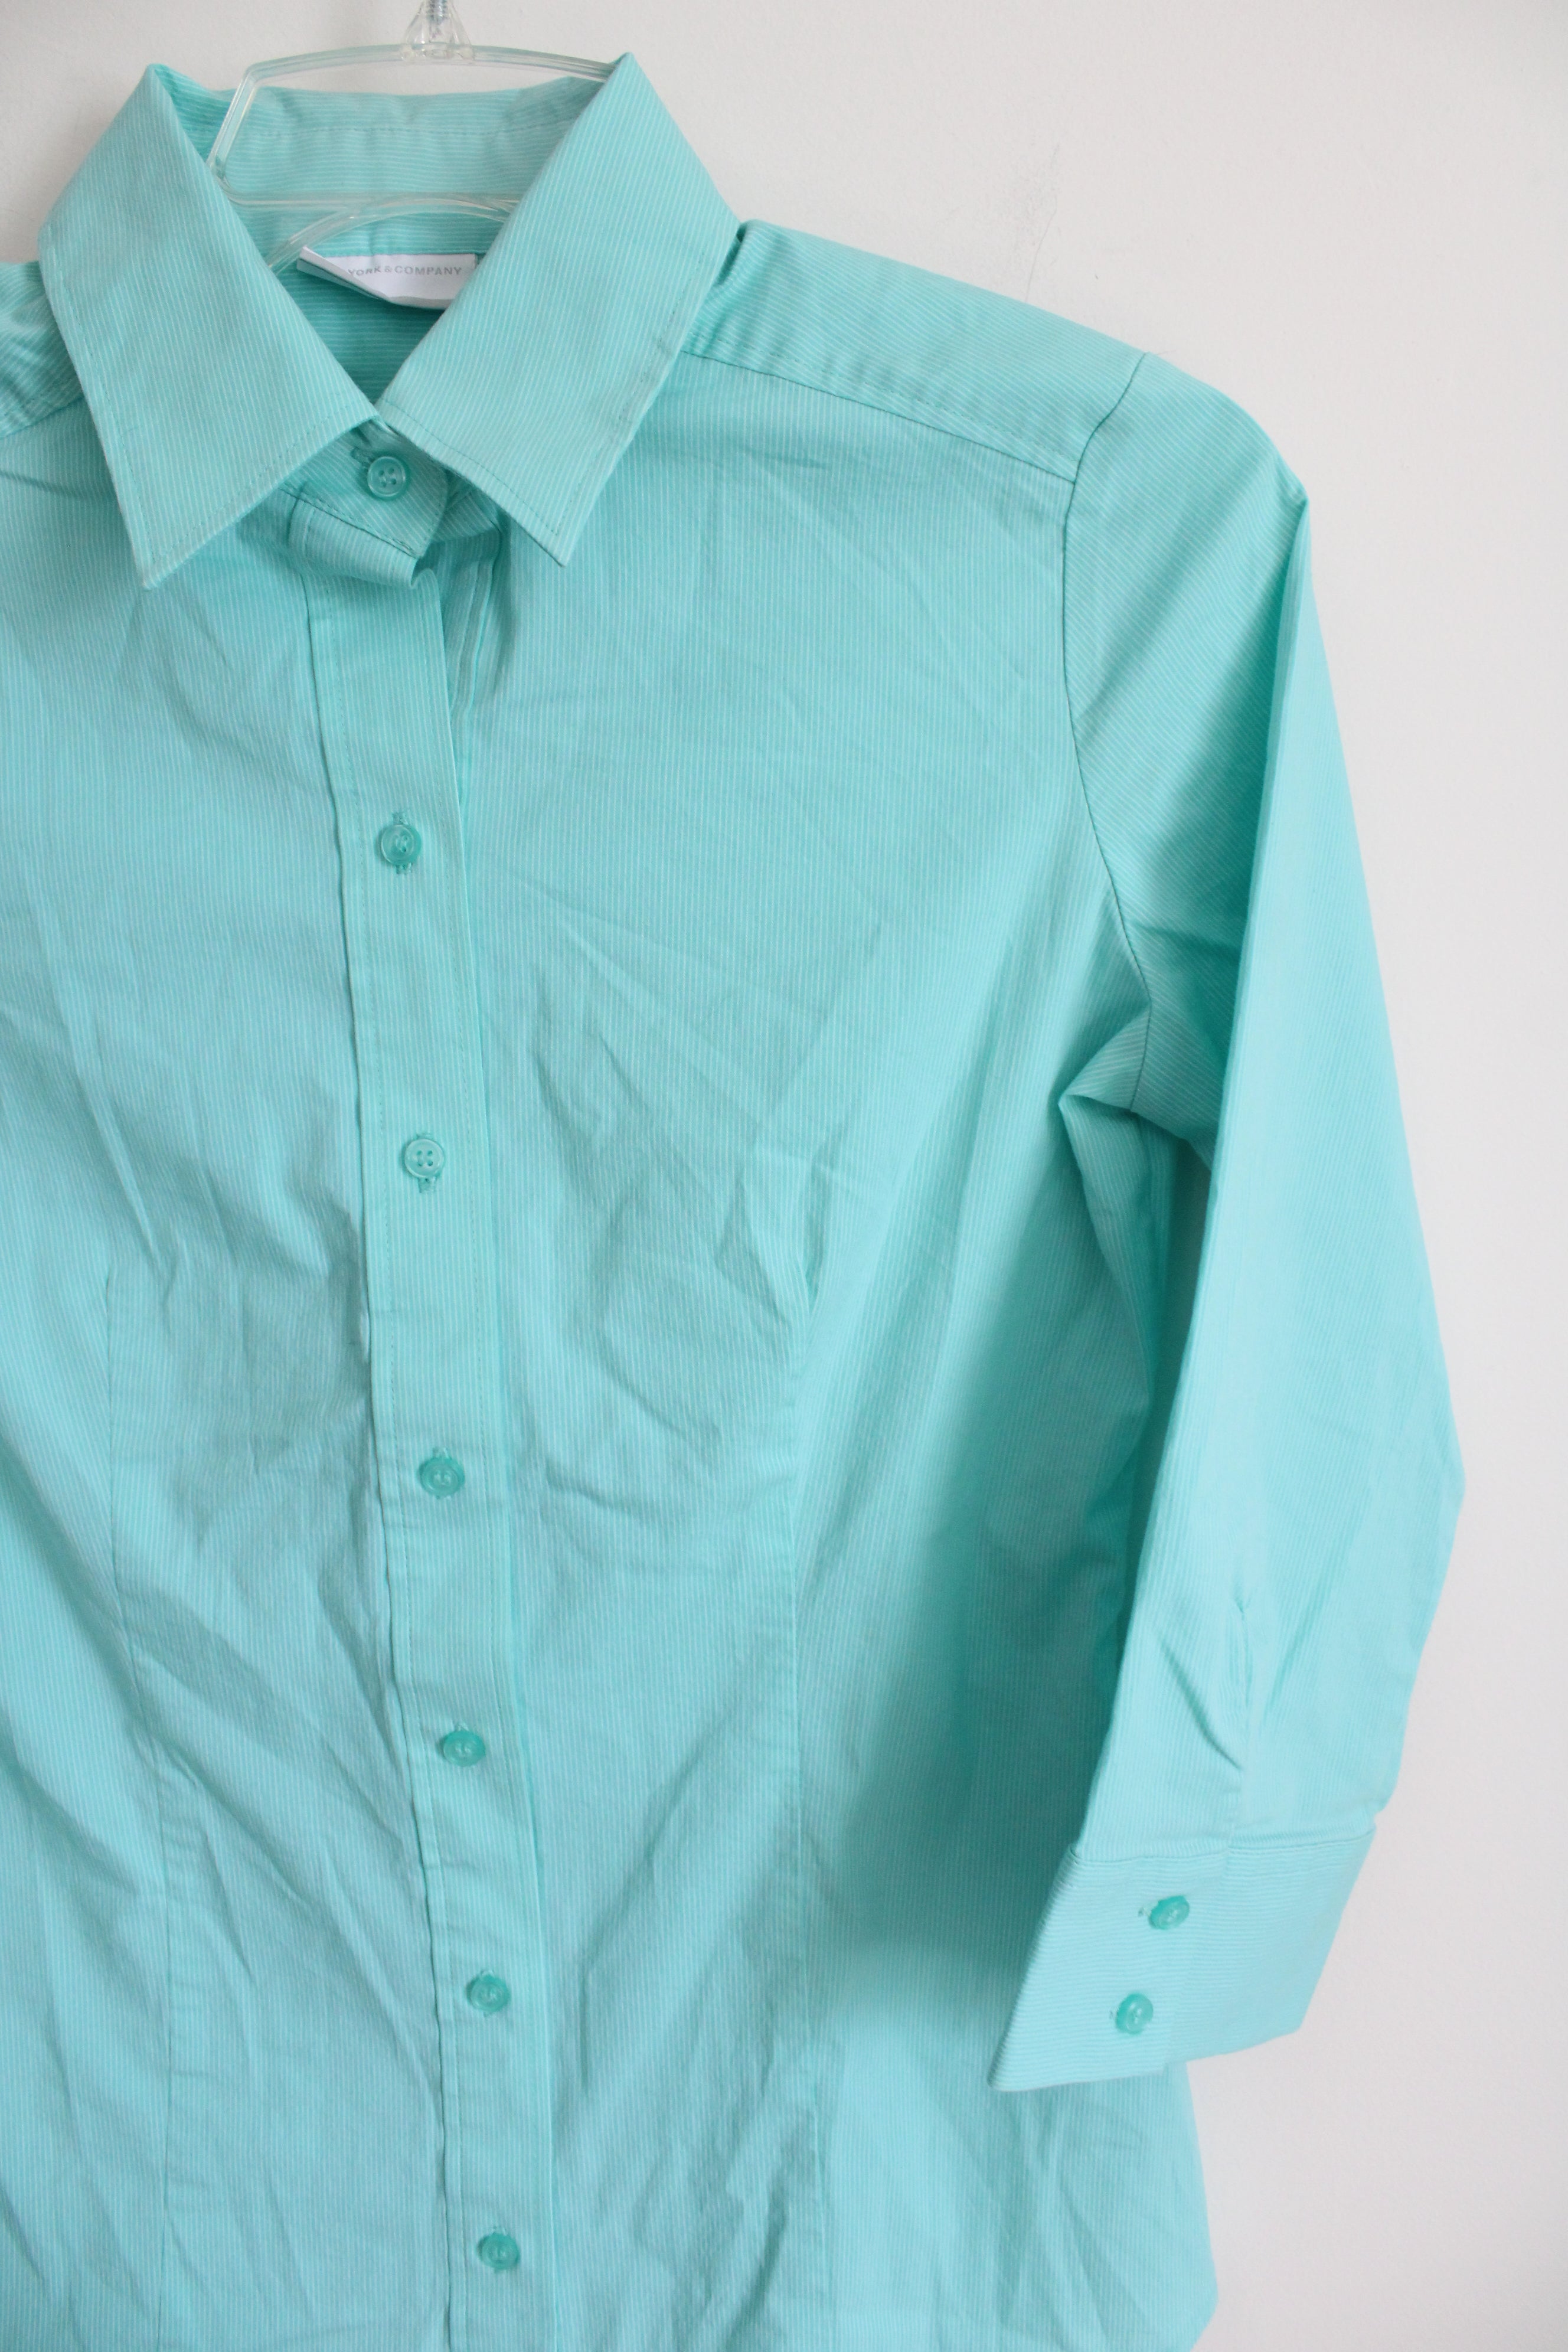 New York & Co. Blue Pinstripe Button Down Shirt | S